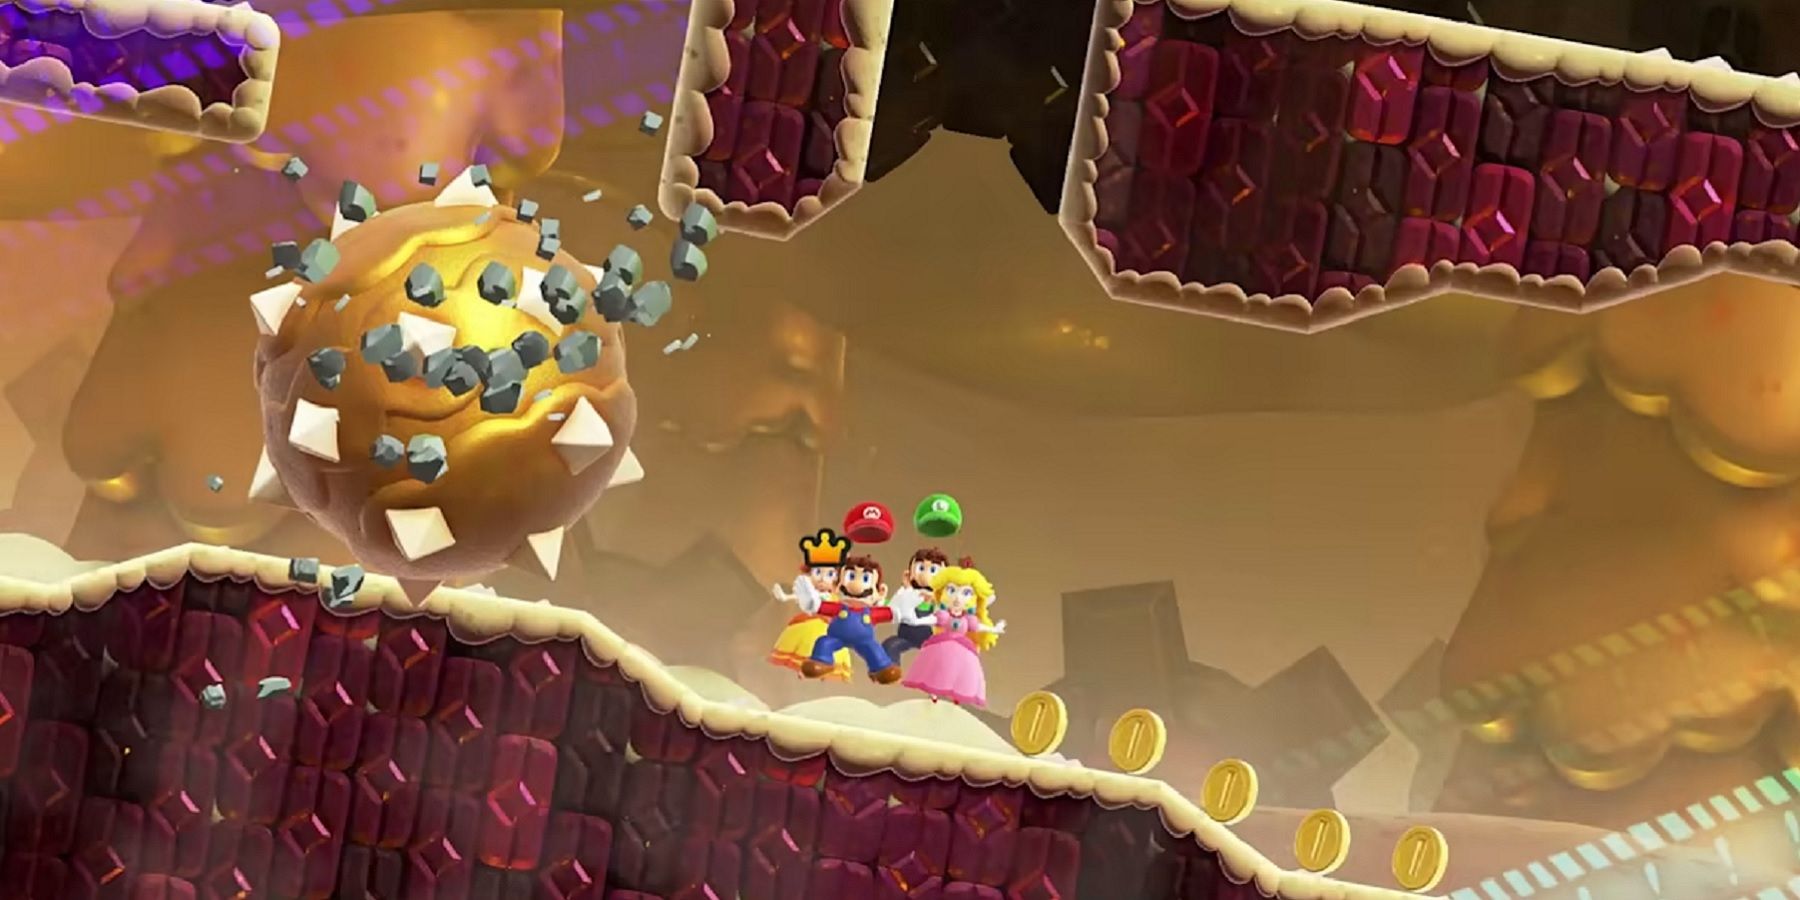 Super Mario Bros. Wonder Online Multiplayer Revealed, No Online Co